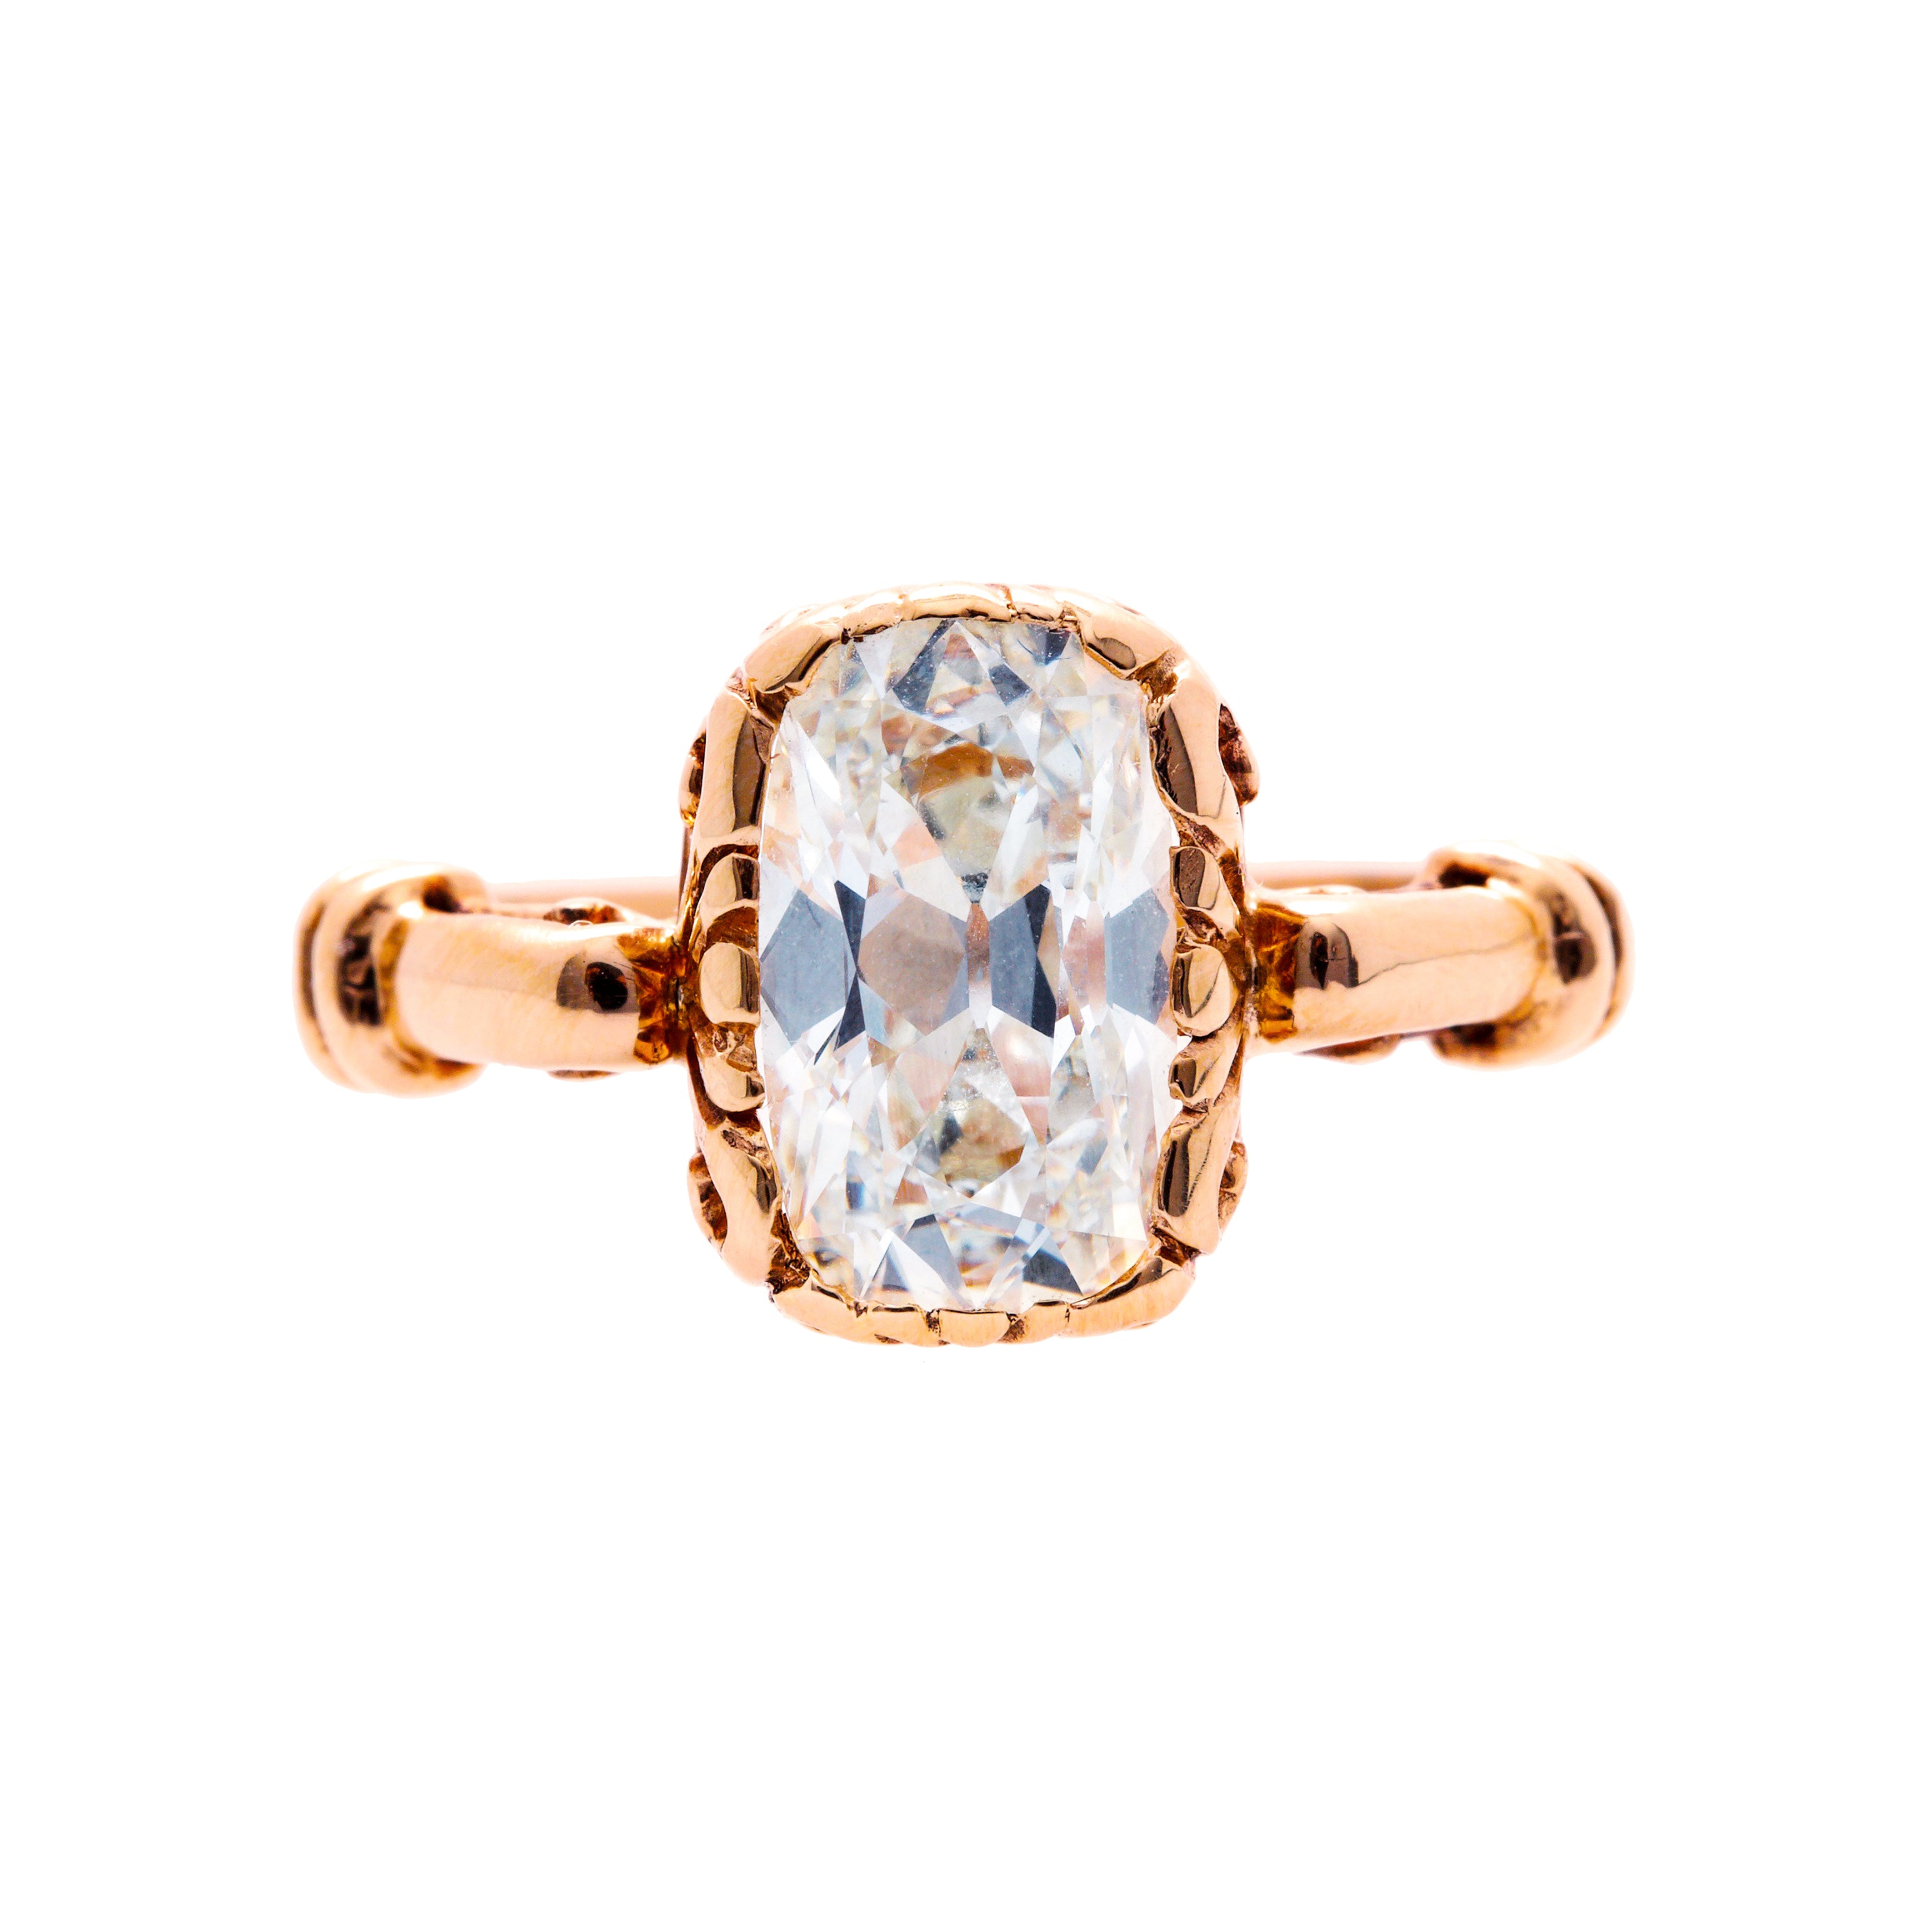 Magnificent Antique Cushion Cut Diamond and 18k Rose Gold Vintage Engagement Ring | Deephaven